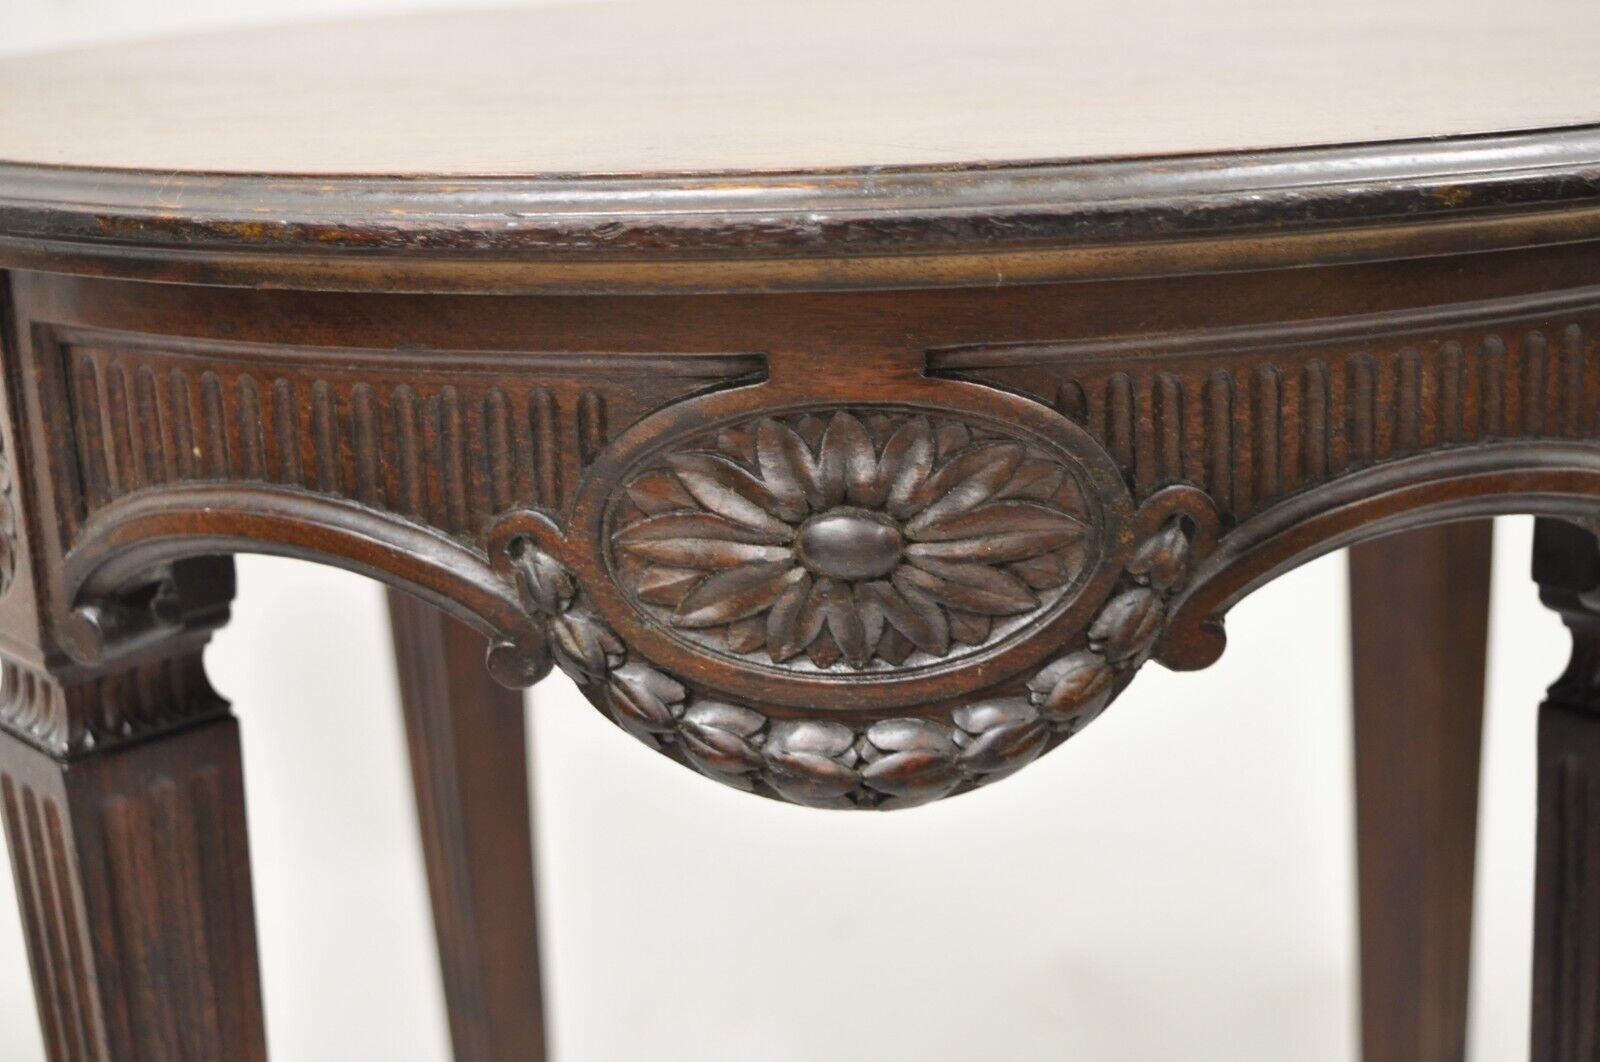 antique 3 legged half moon table